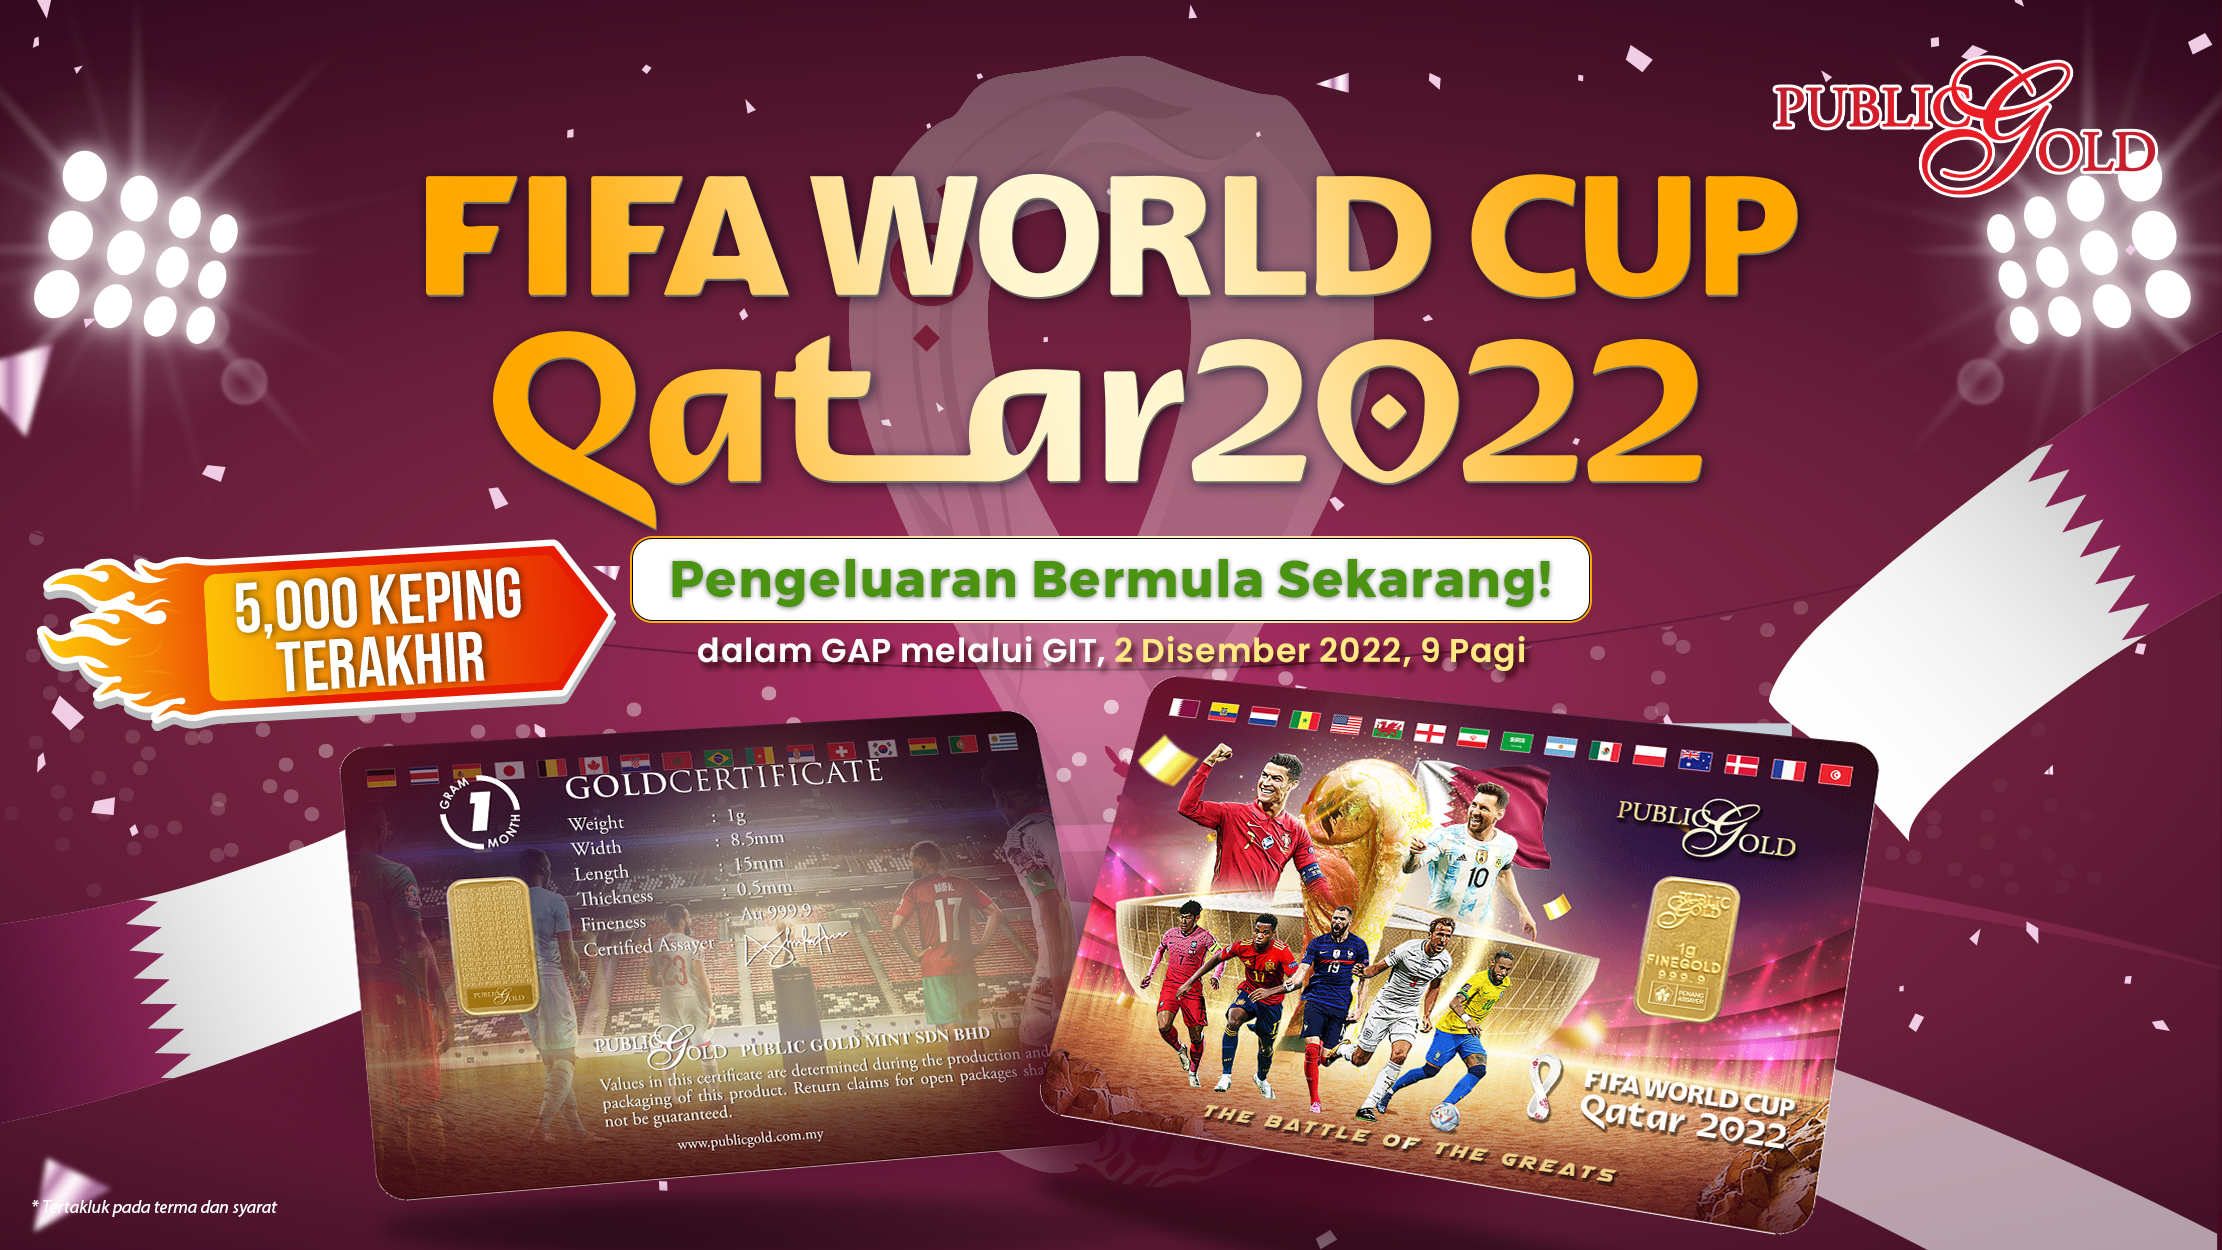 GAP New Launch - FIFA WORLD CUP QATAR 2022